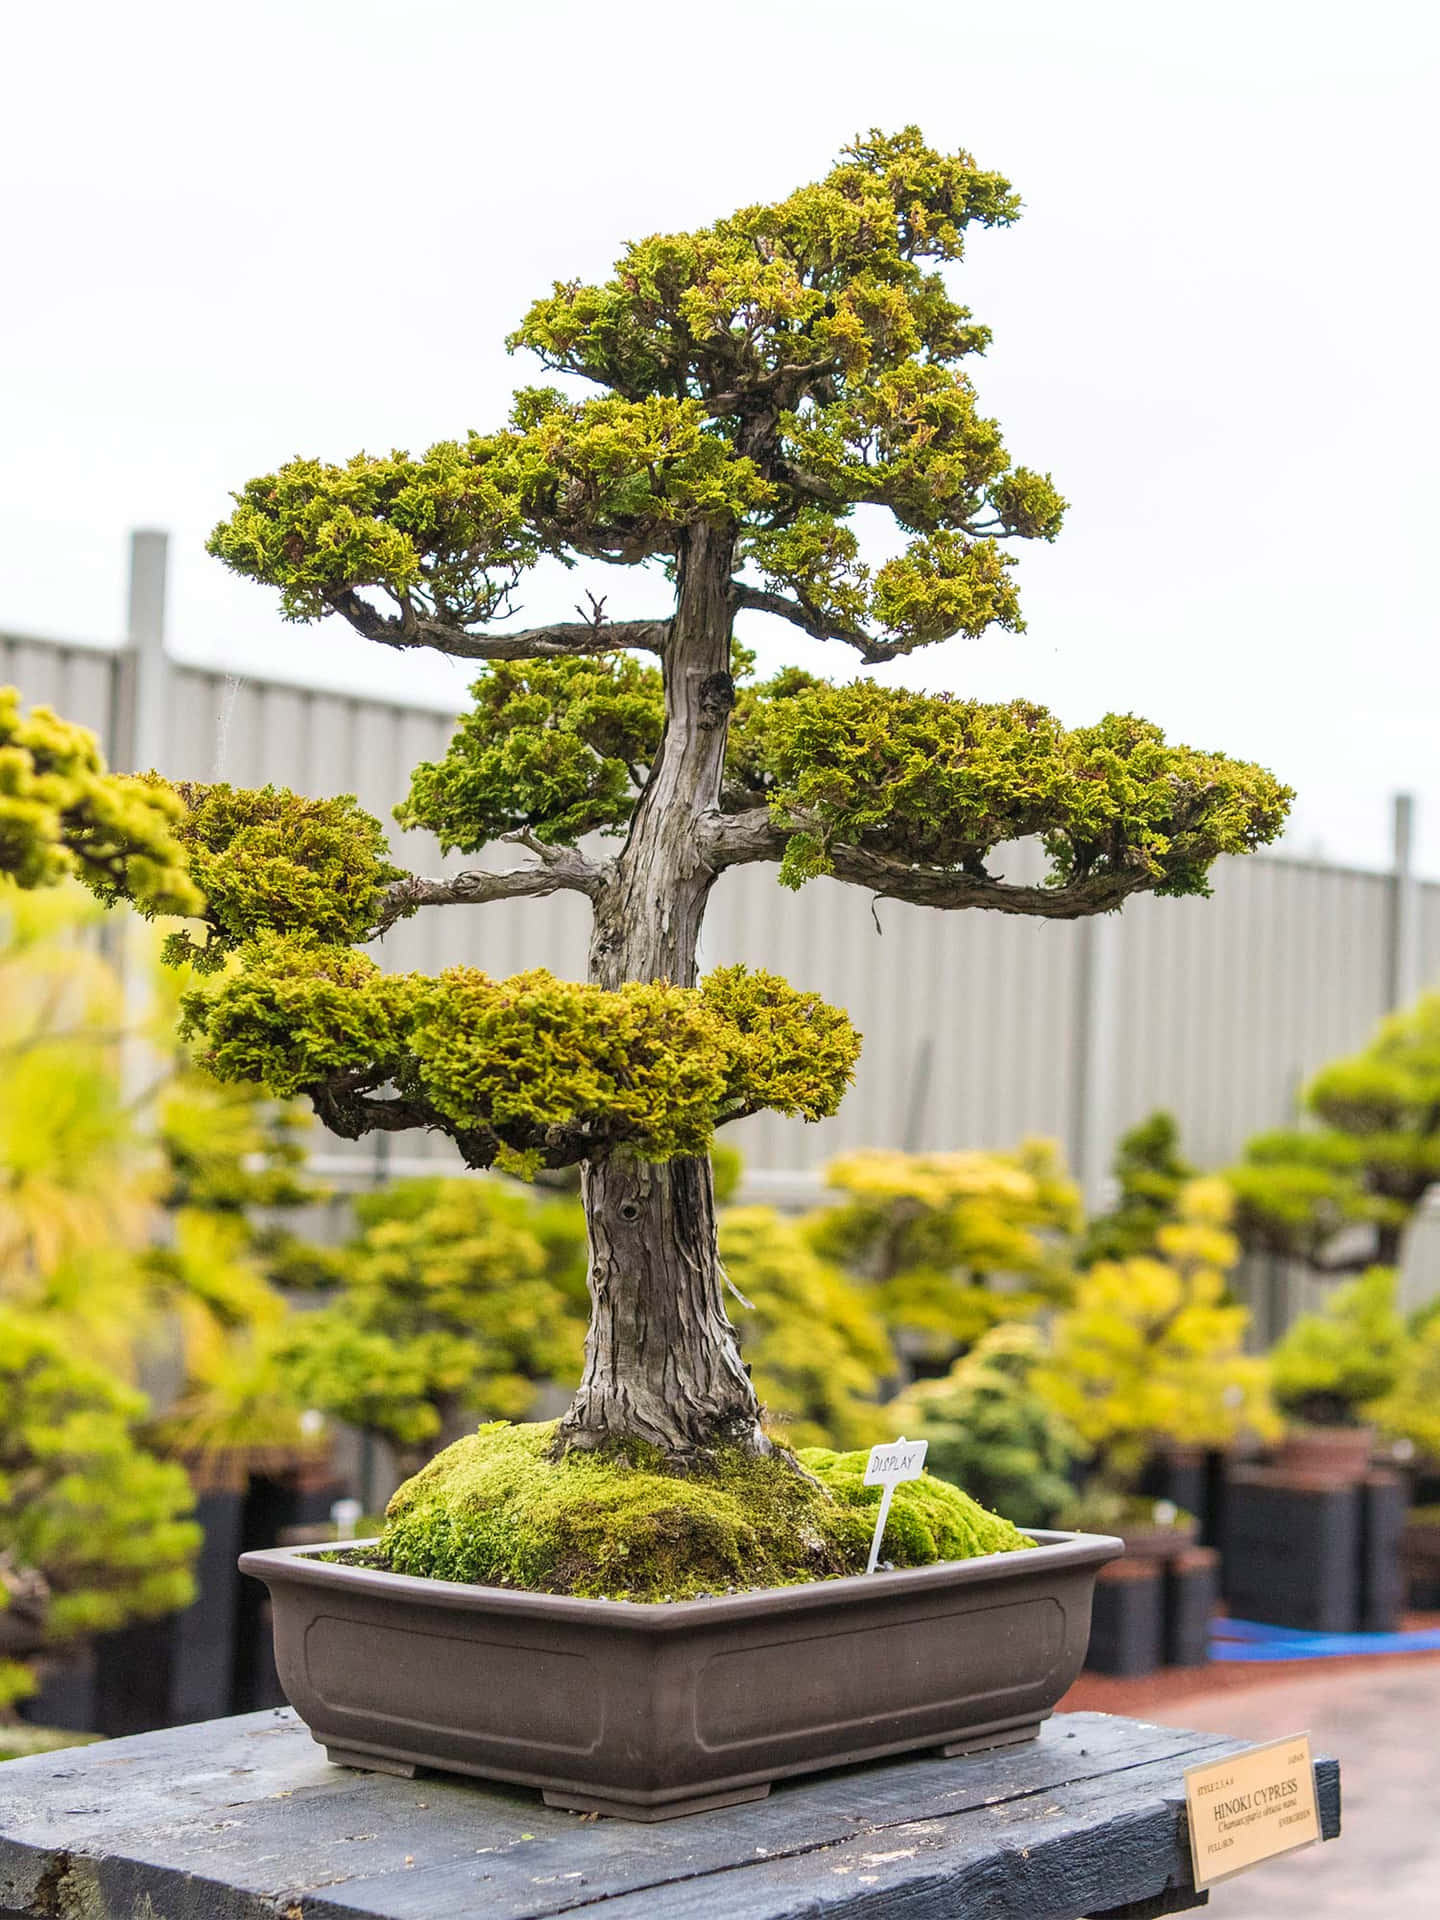 A Bonsai Tree In A Small Pot On Display